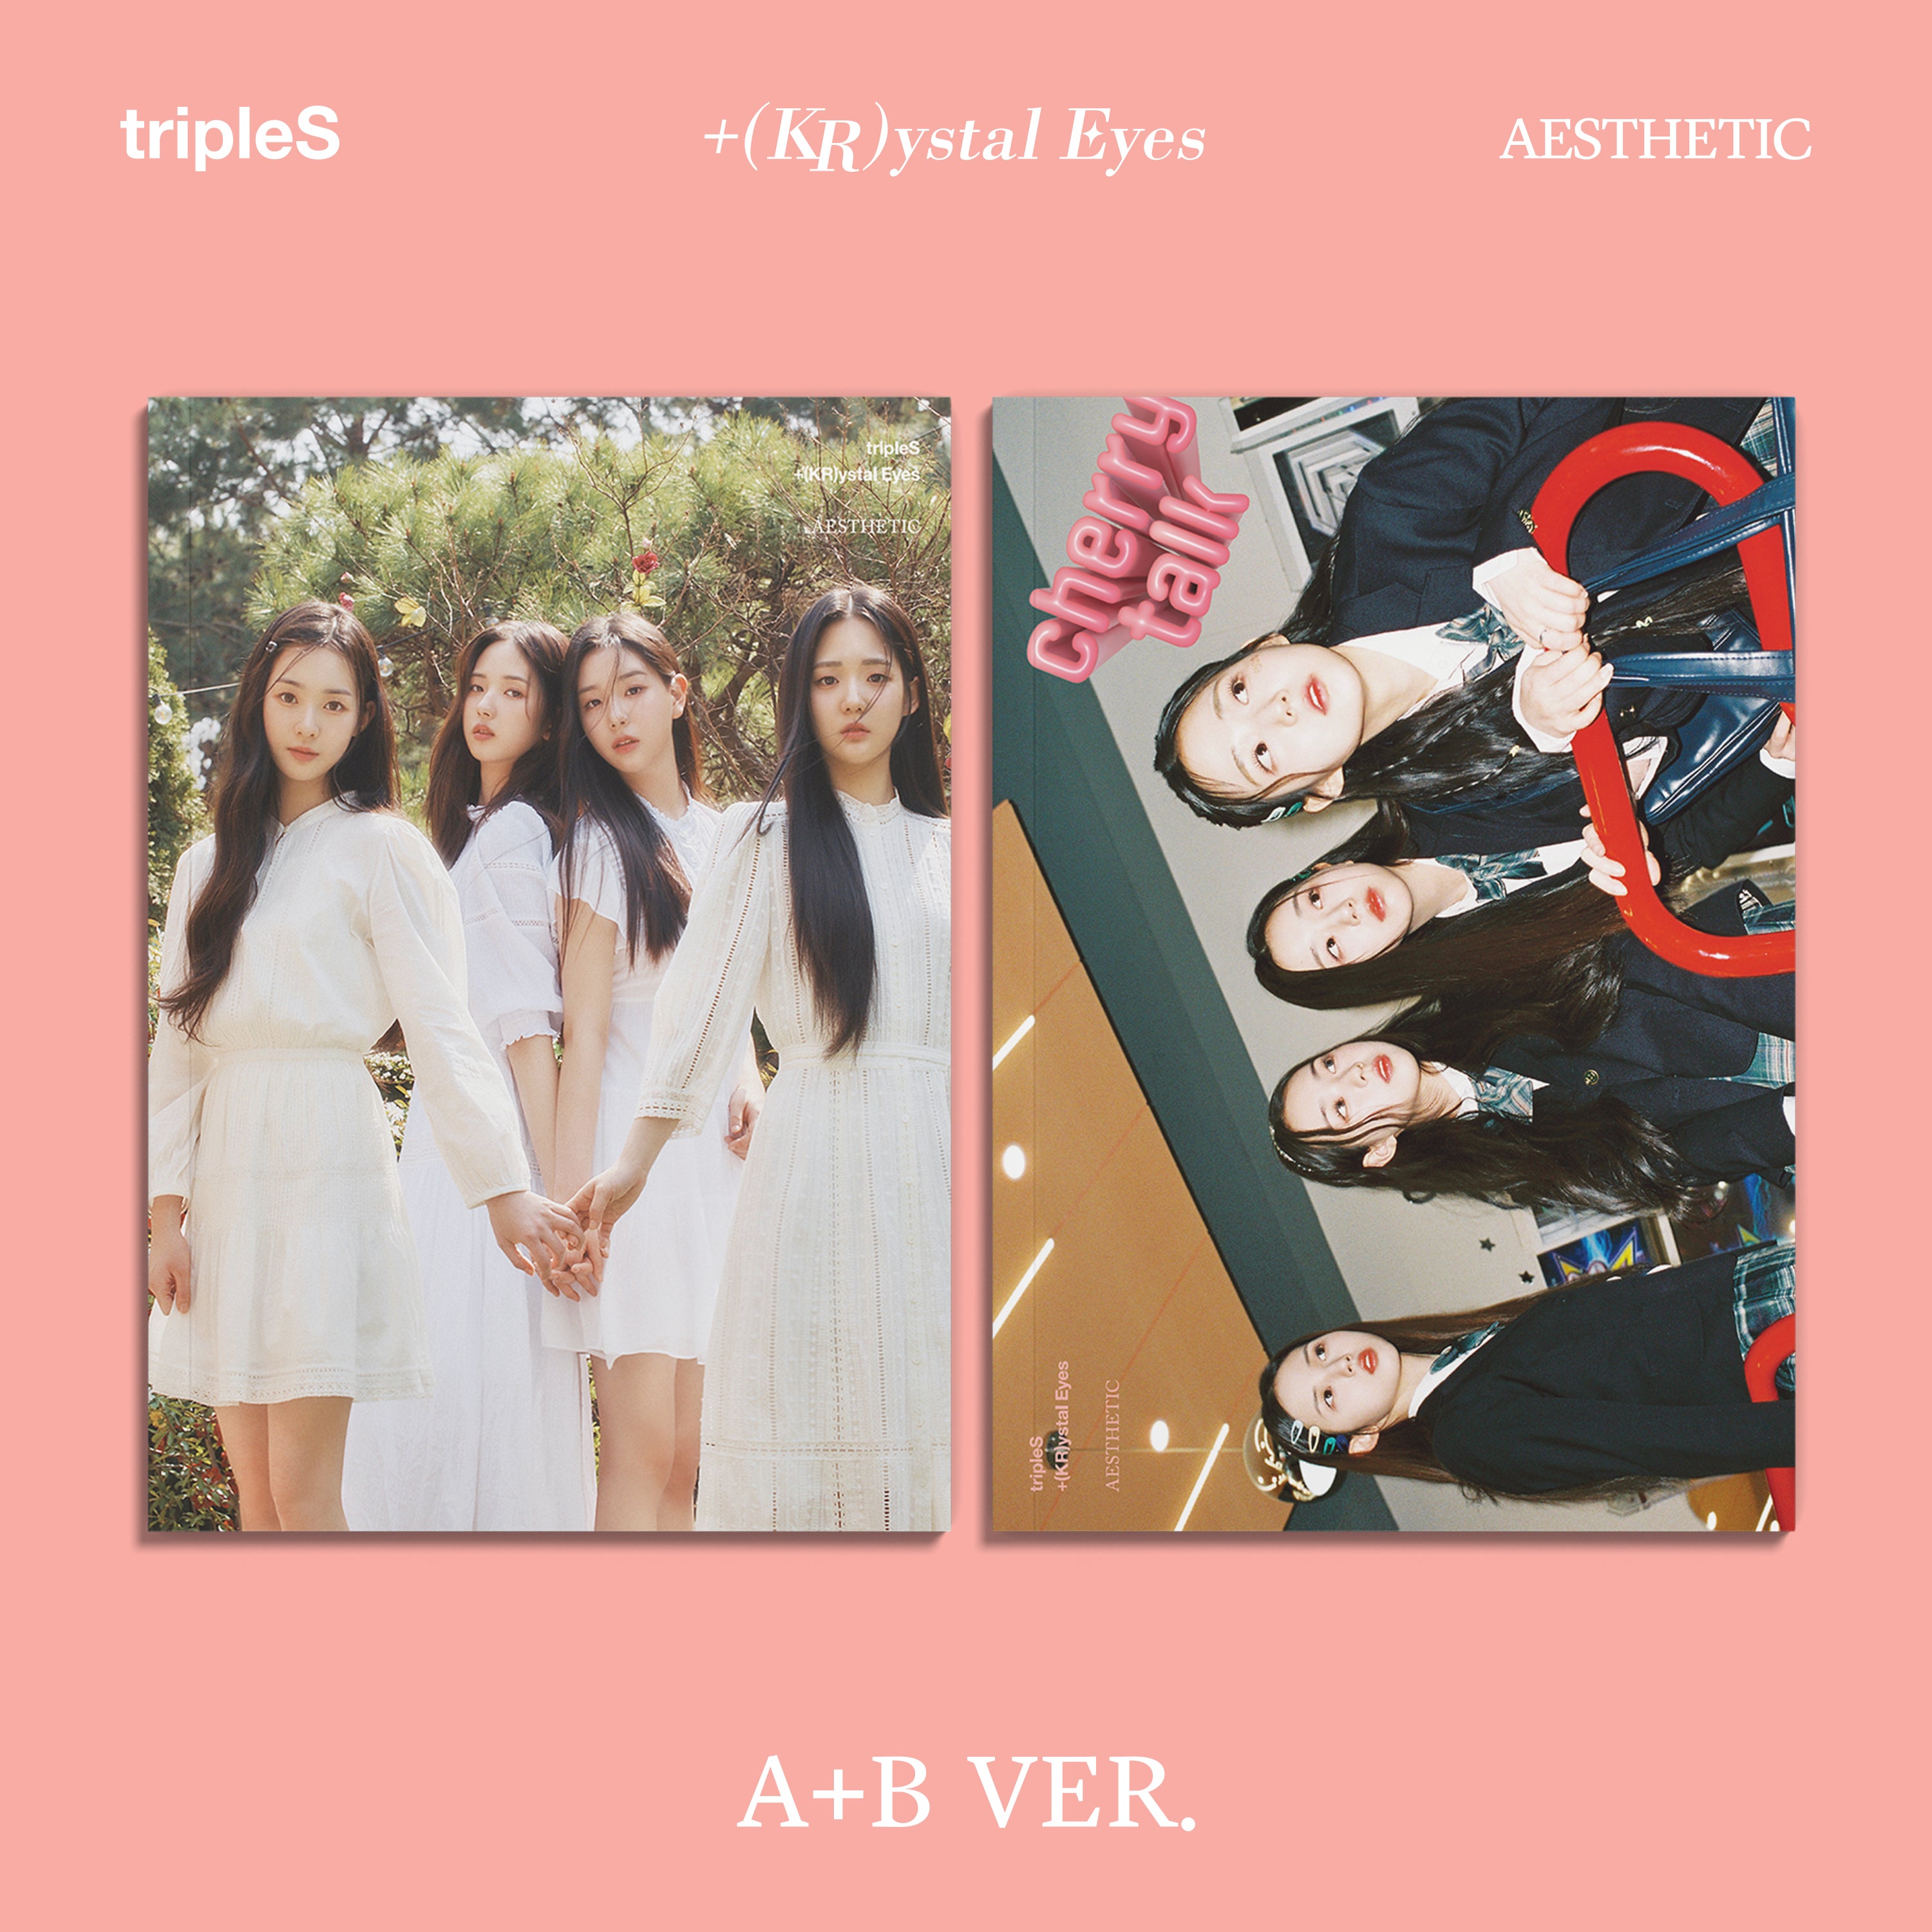 tripleS - Mini Album +(KR)ystal Eyes AESTHETIC